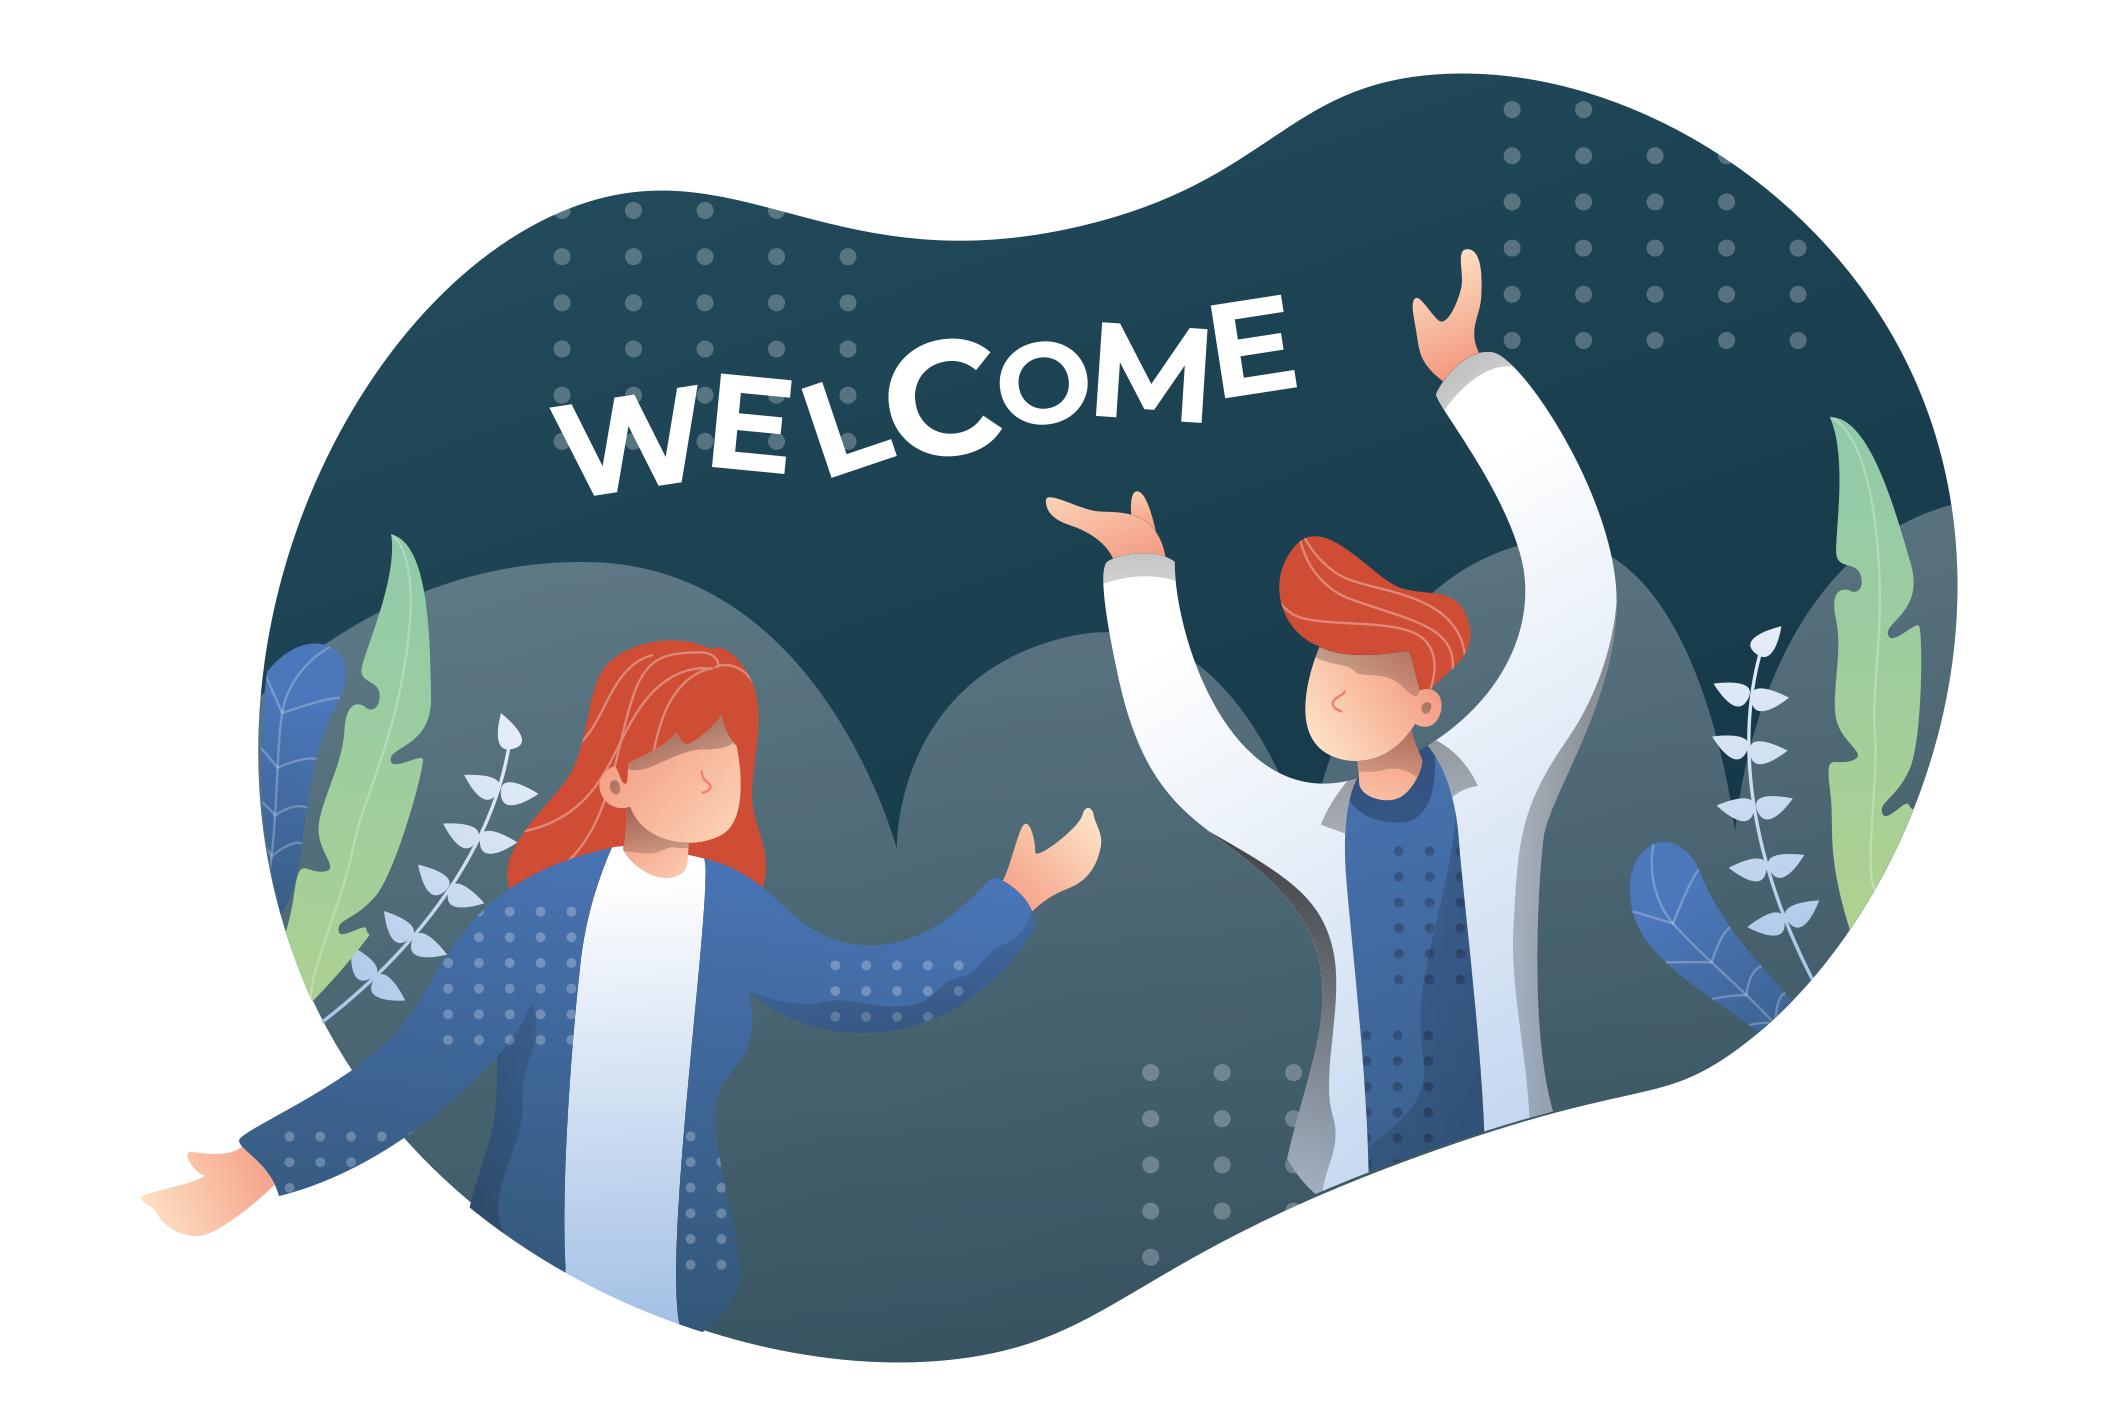 Welcome users. Welcome вектор. Welcome иллюстрация. Графика Welcome. Welcome тренинг иллюстрация.